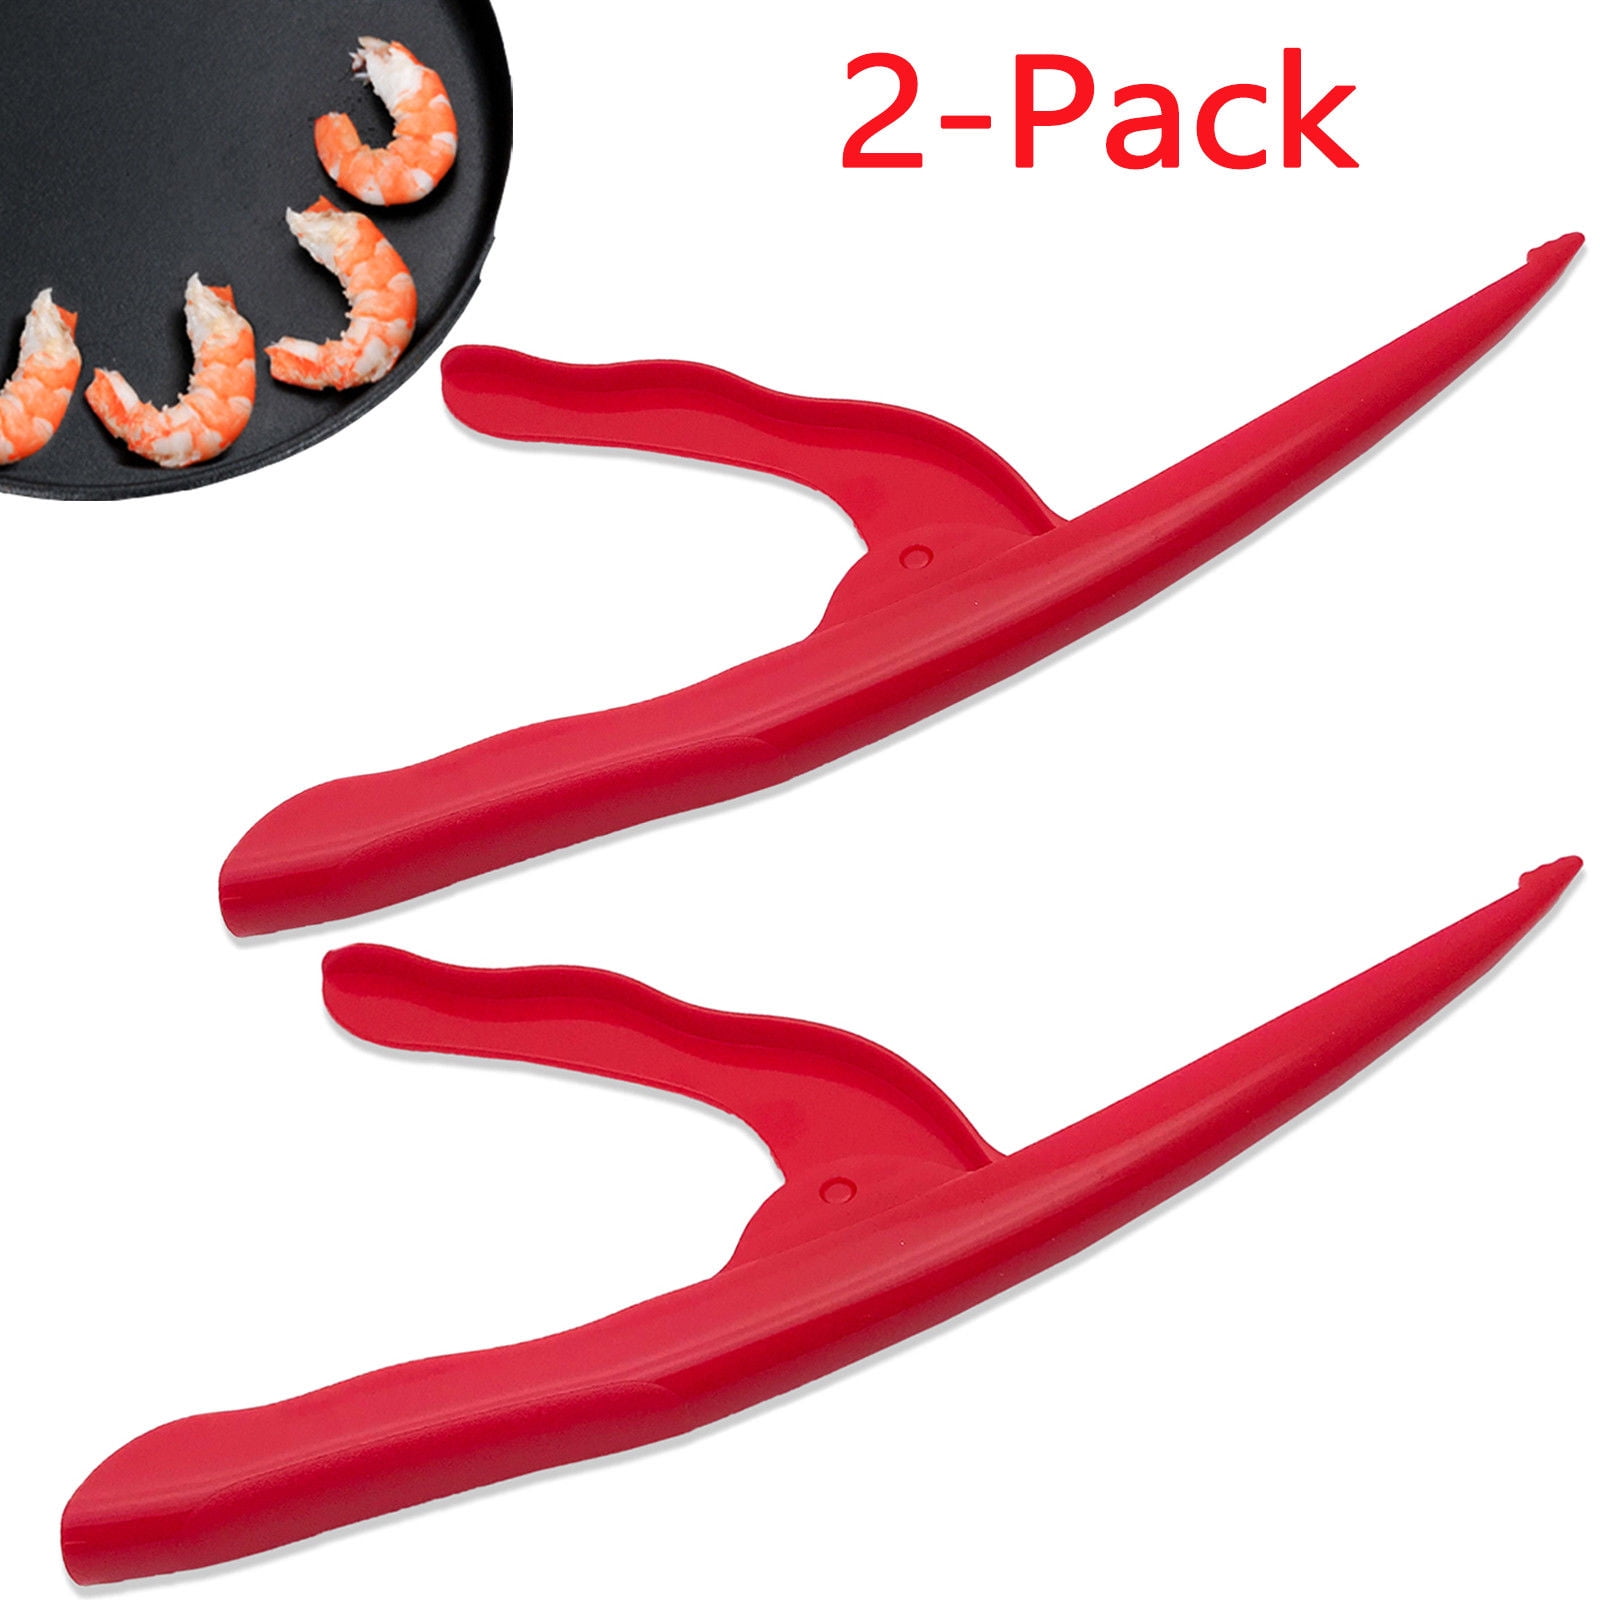 2-Pack Portable Prawn Peeler Shrimp Deveiner Peel Devices Kitchens Tools New 